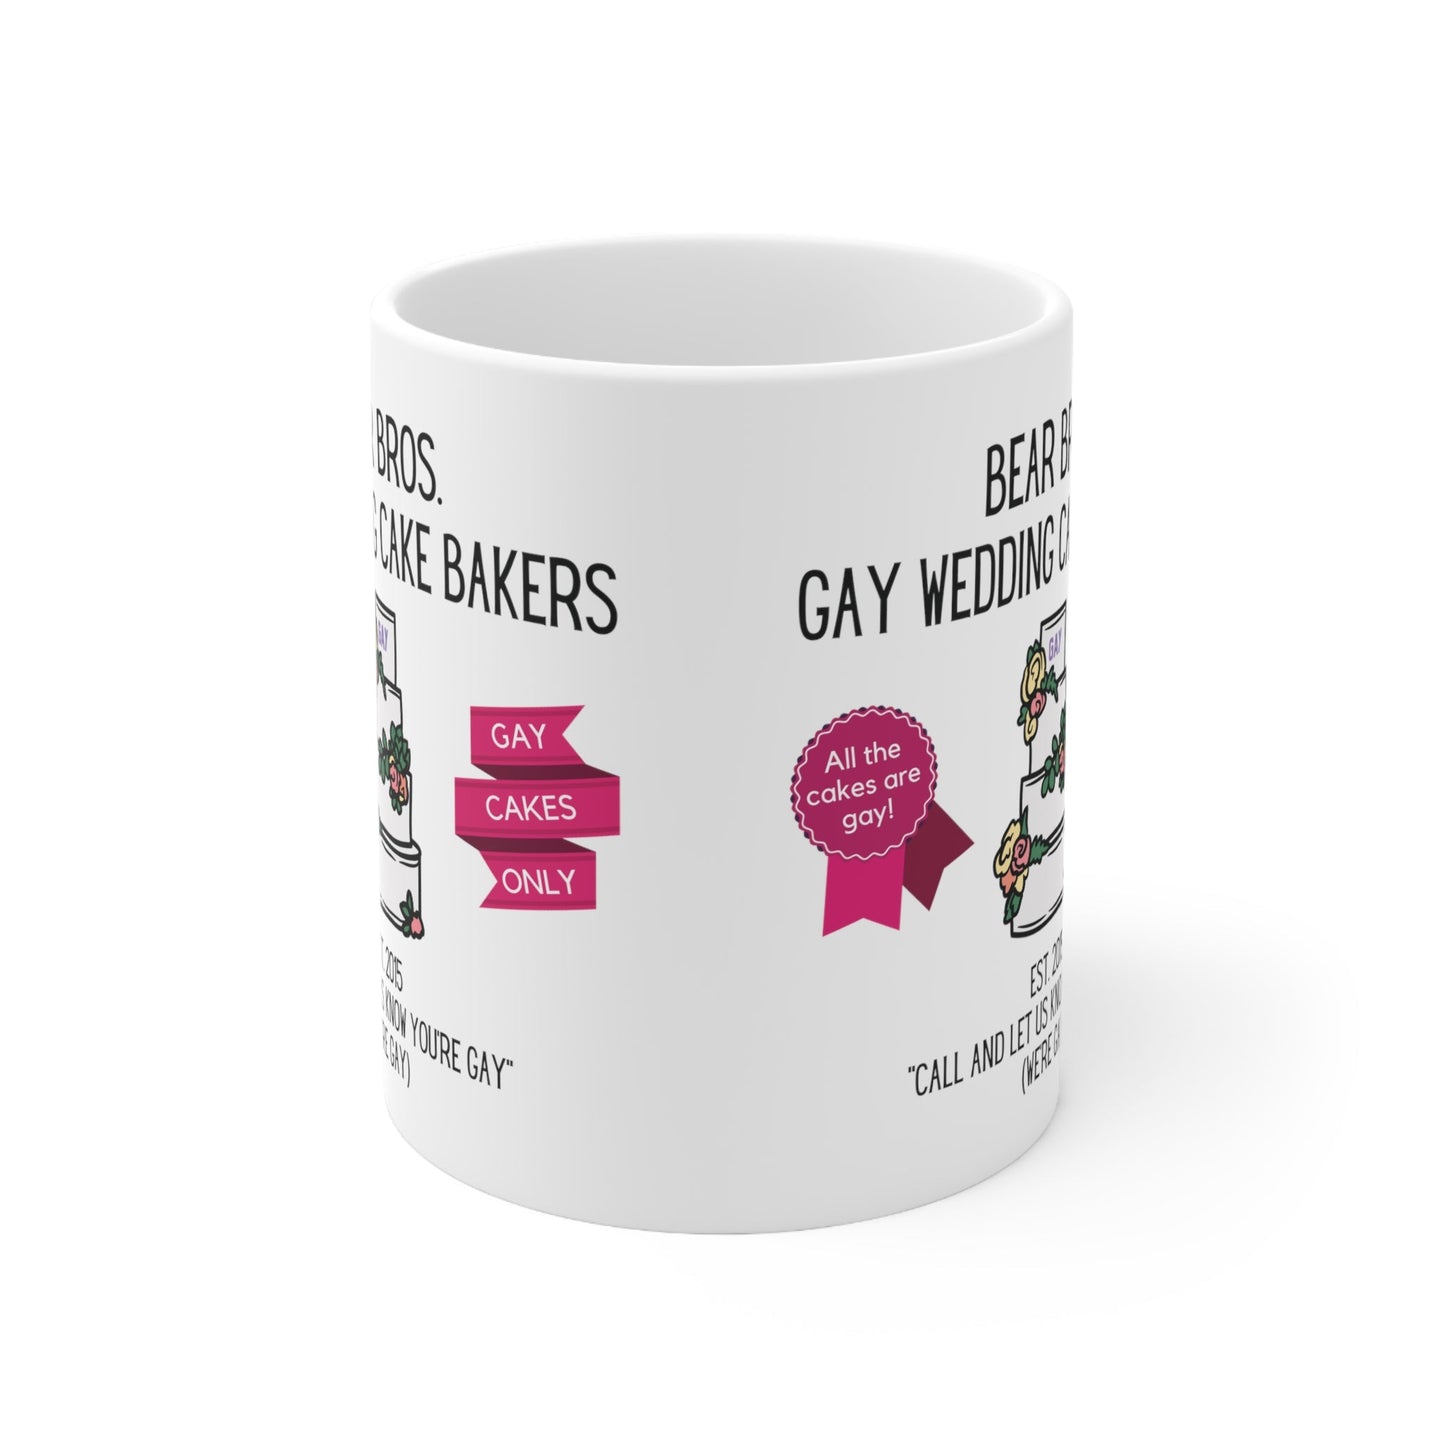 Bear Bros. Gay Wedding Cake Bakers Ceramic Mug 11oz